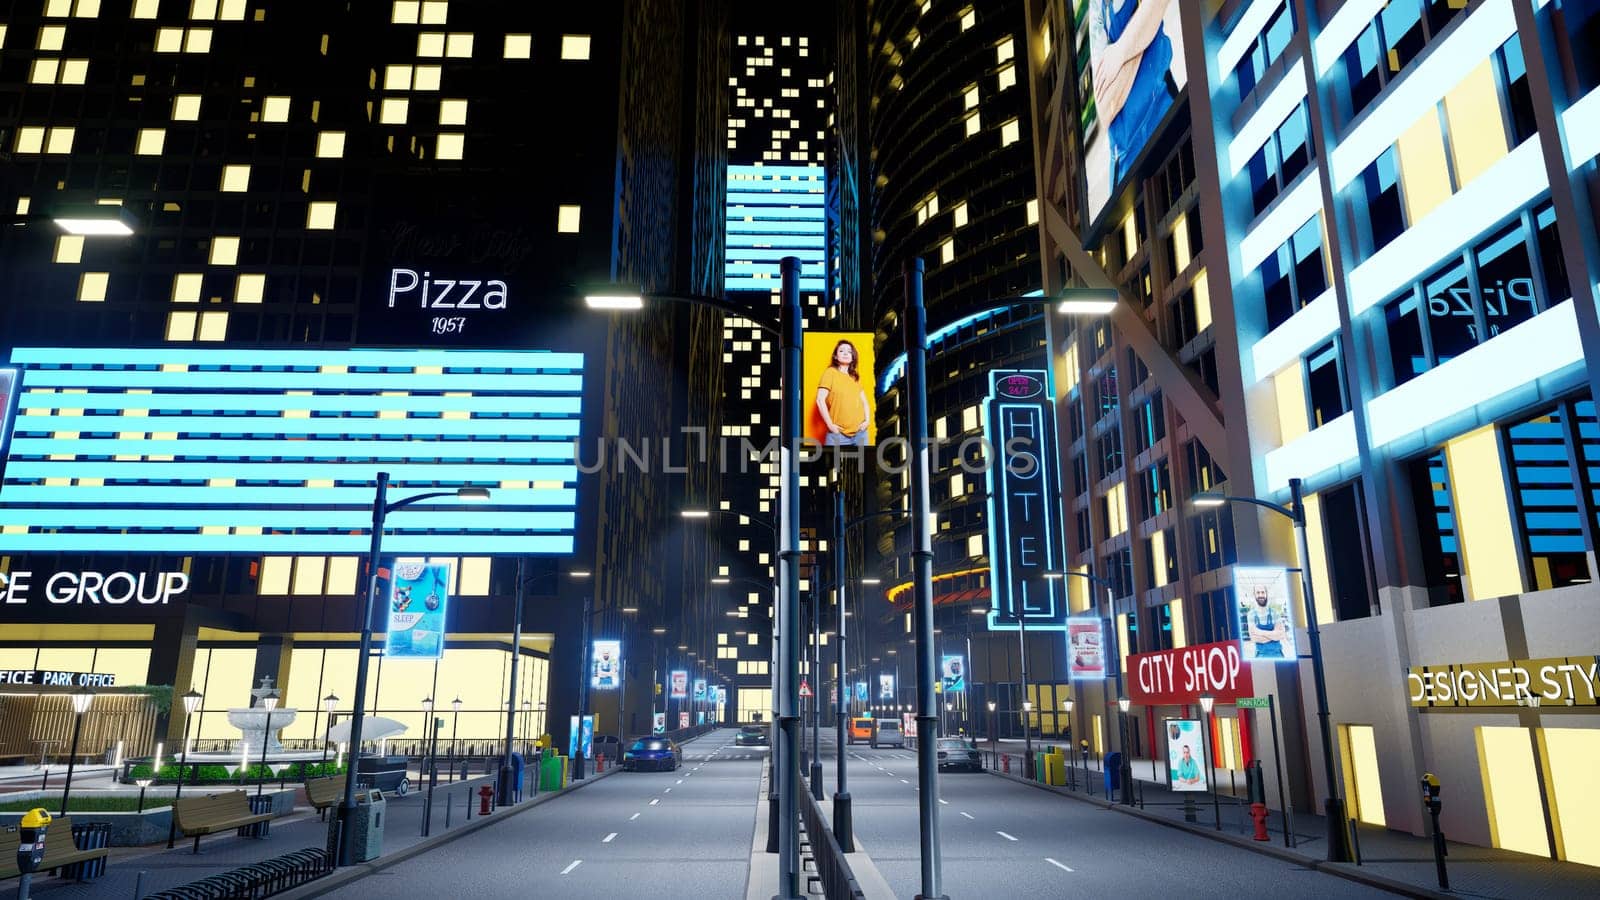 Neon billboards in city center at night by DCStudio